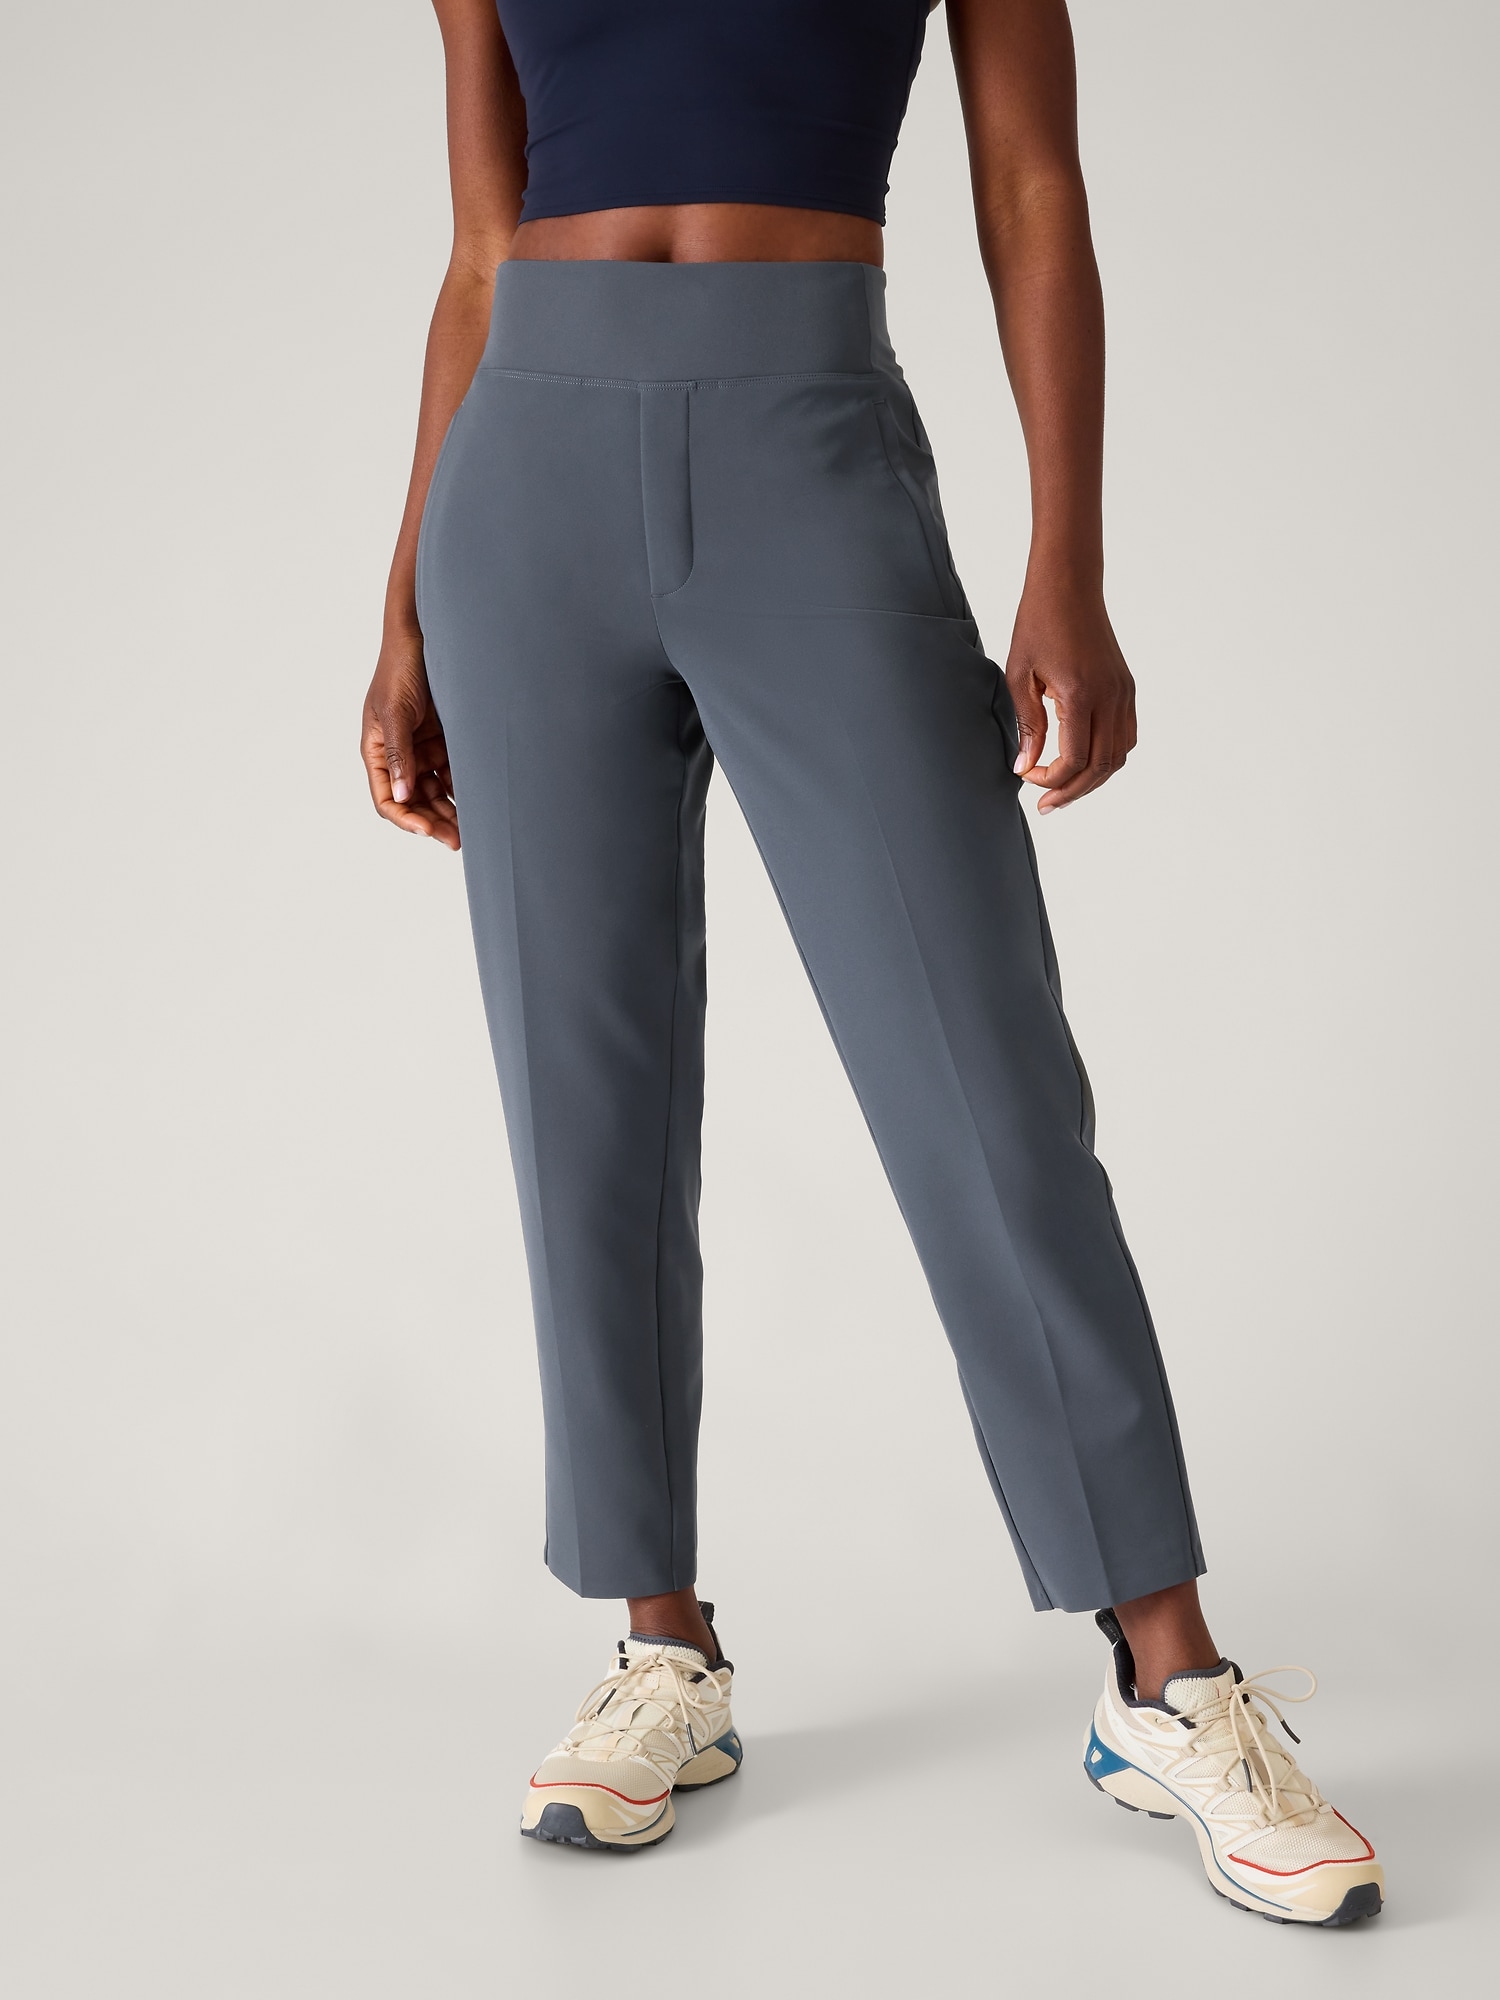 Adjustable-Rise Go-Dry Yoga Pants for Women